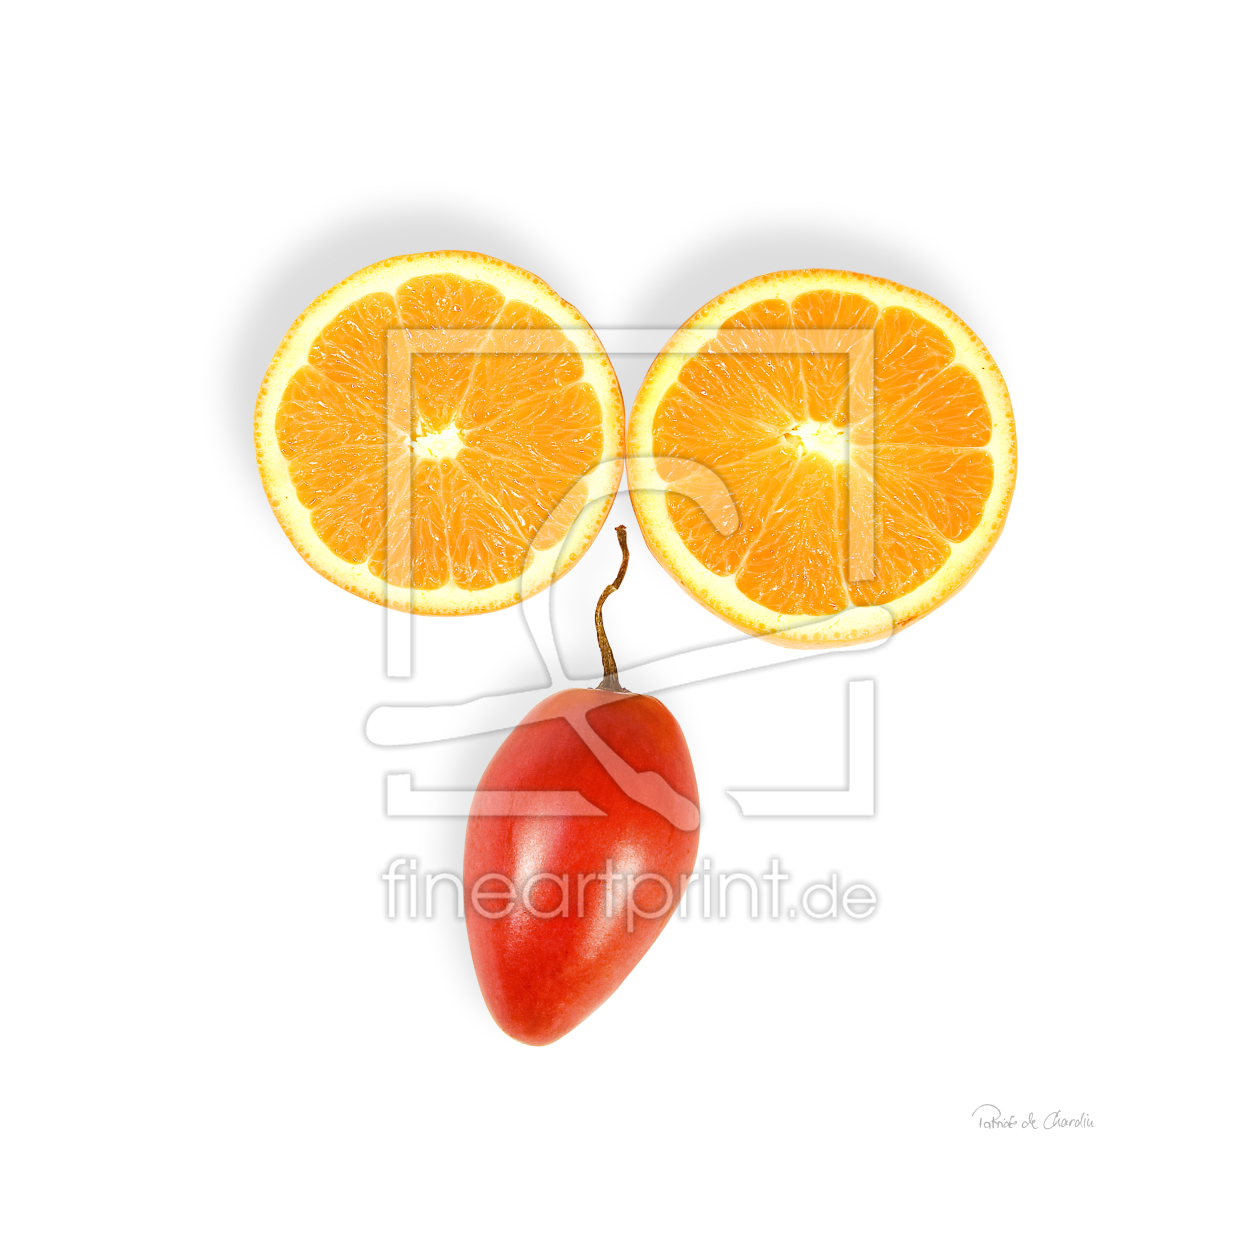 Bild-Nr.: 9417016 Fruits Face erstellt von Patrick-de-Chardin